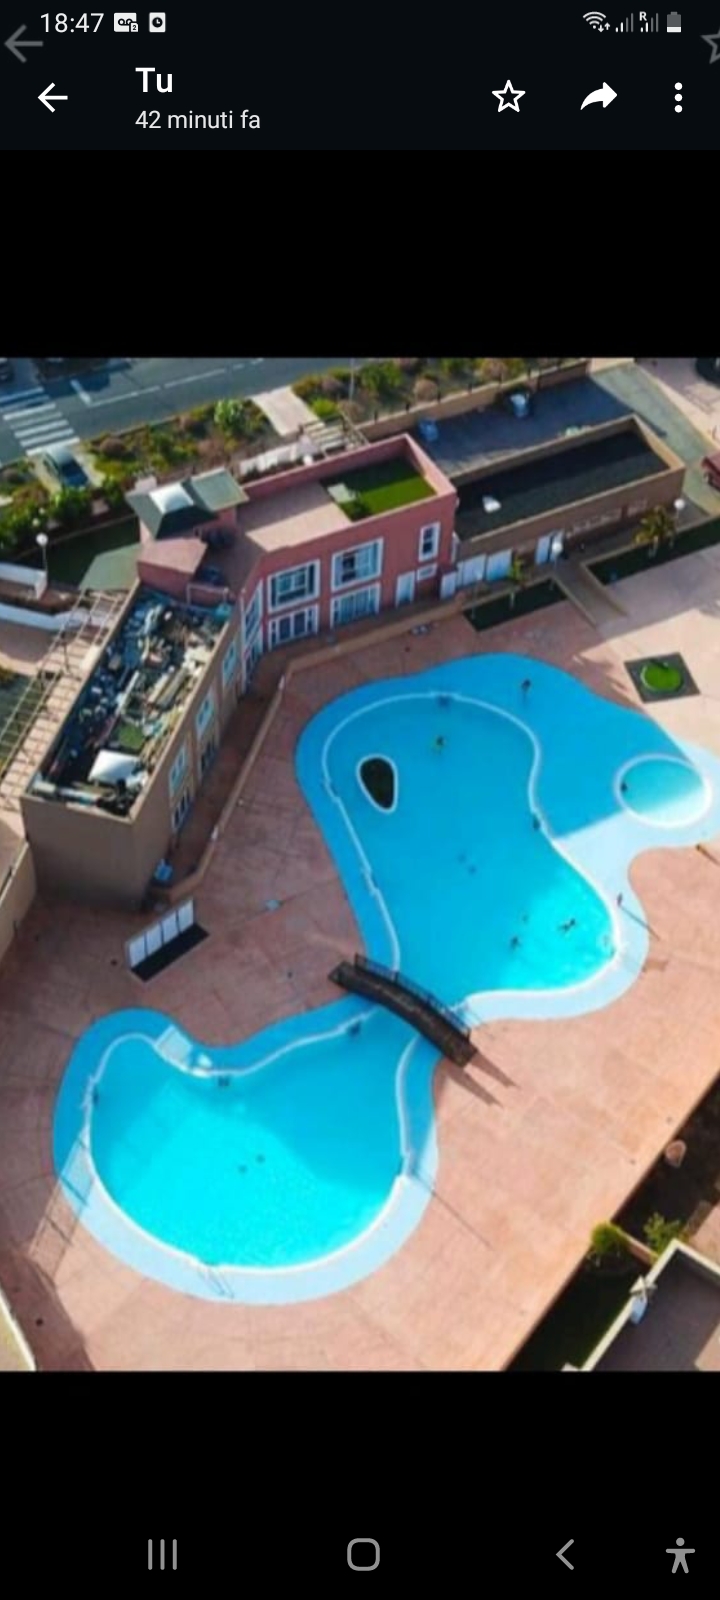 loft for rent in Fuerteventura - swimmingpool